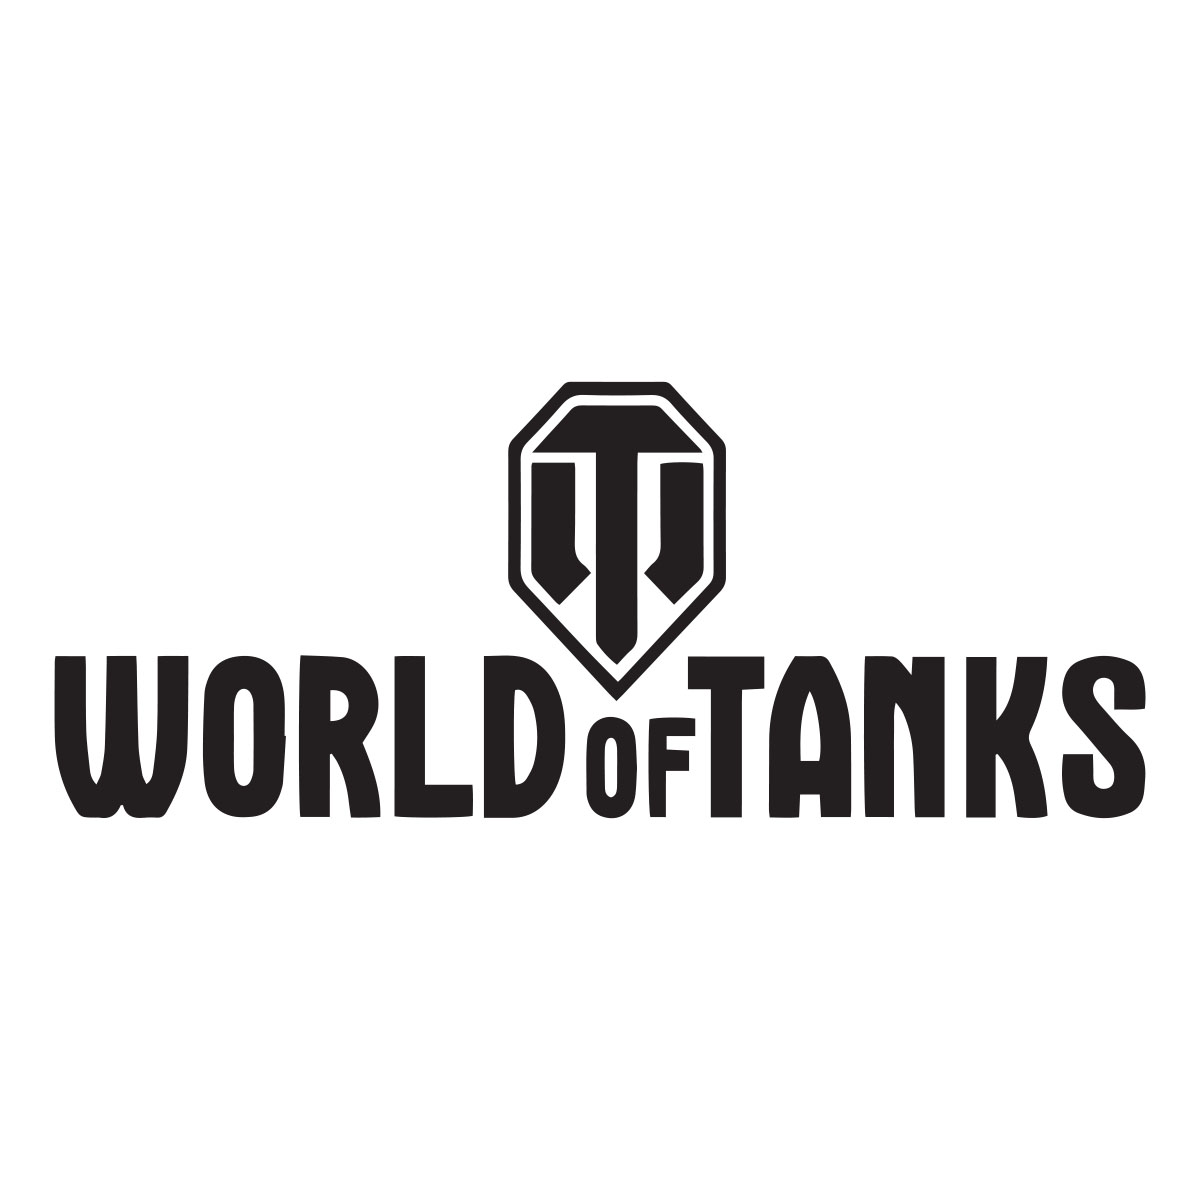 Wit v. WOT эмблема. Наклейки WOT. Логотип ворлд оф танк. World of Tanks наклейки на машину.